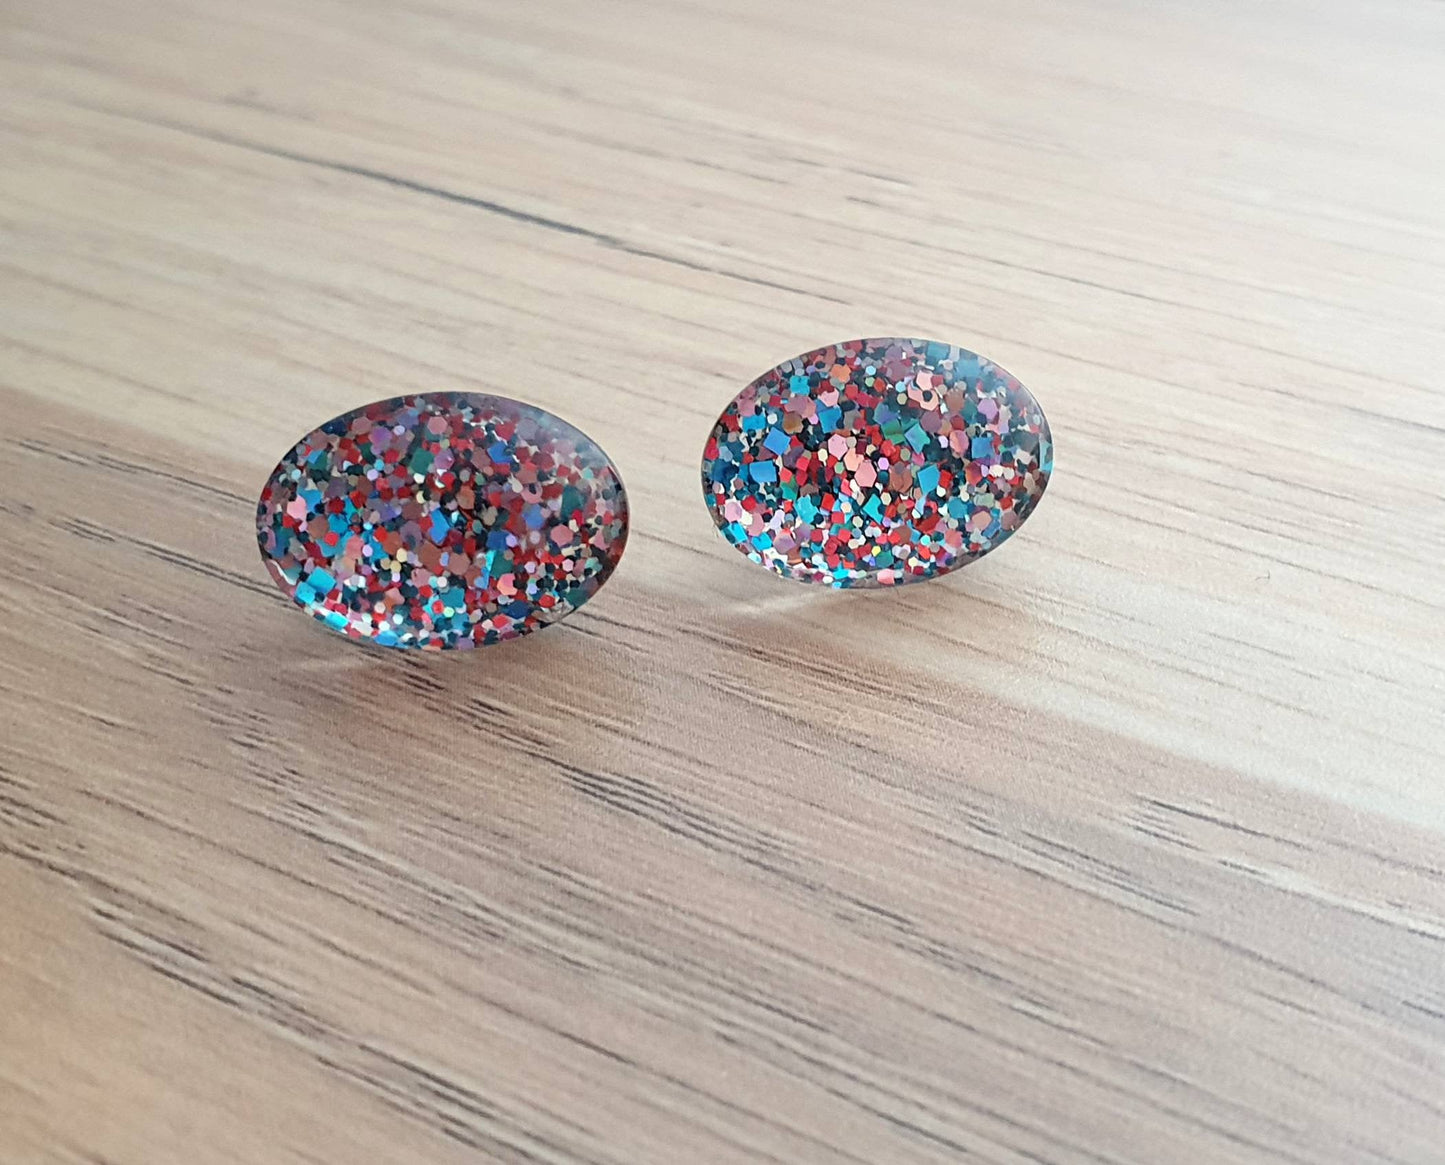 Oval Glass Glitter Resin Stud Earrings made of Stainless Steel, Confetti Glitter Earrings